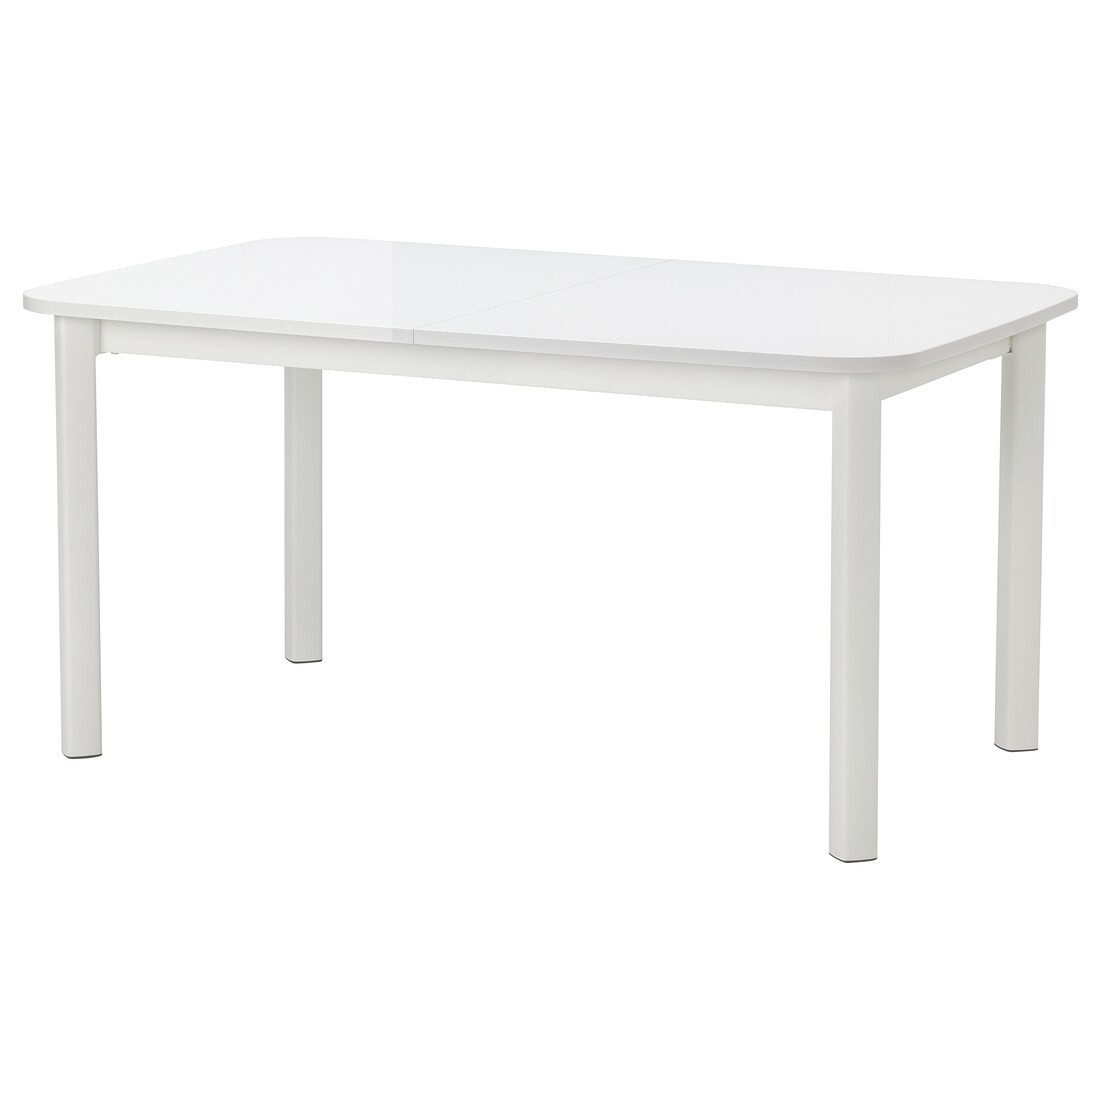 IKEA STRANDTORP СТРАНДТОРП Раздвижной стол, белый, 150/205/260x95 cм 40487278 404.872.78